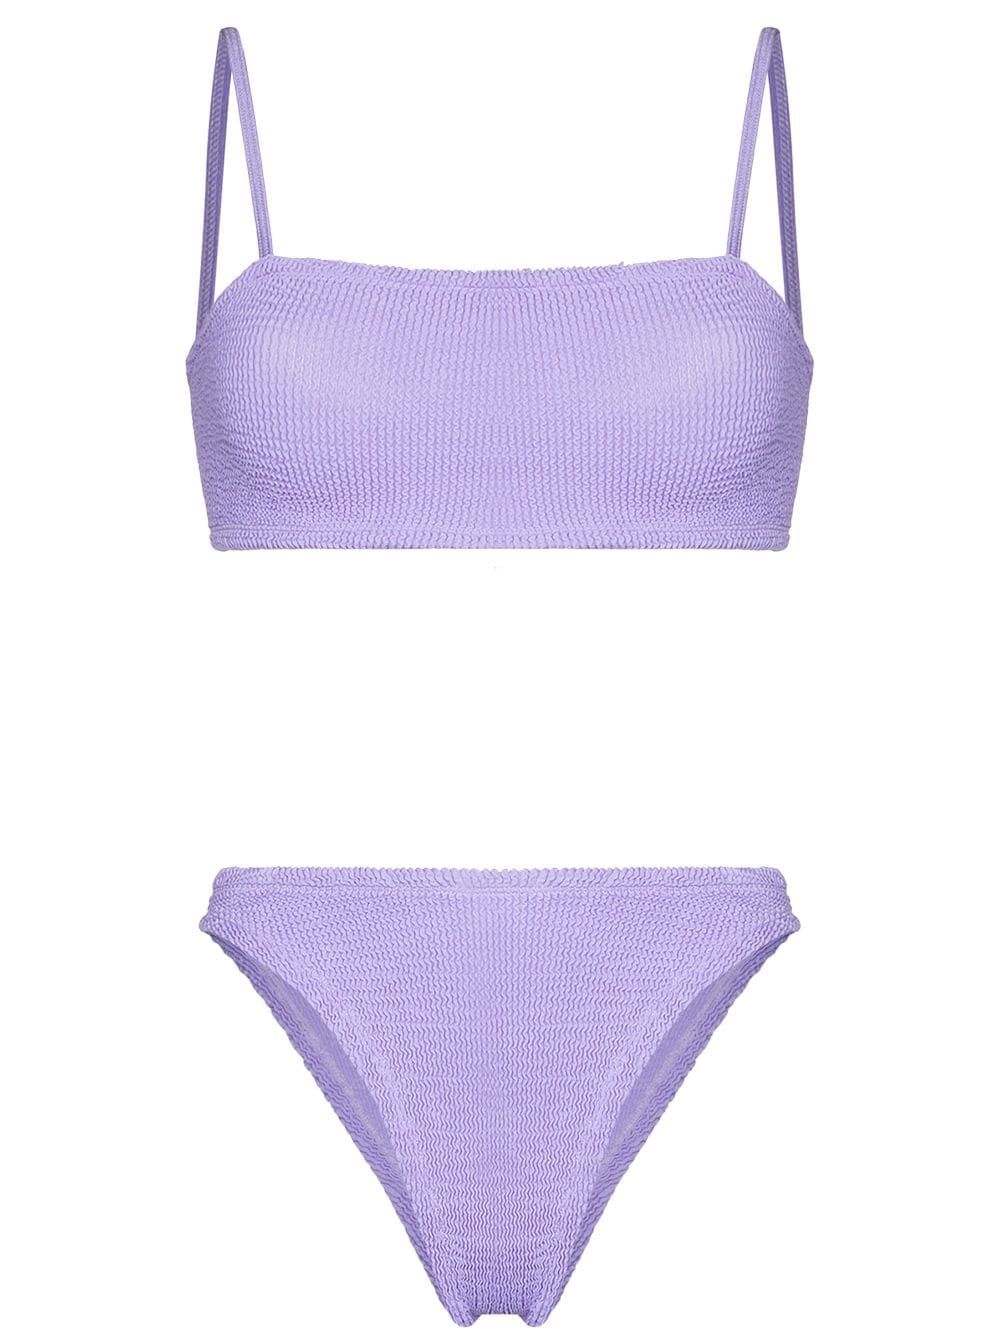 Gigi bikini set | Farfetch Global